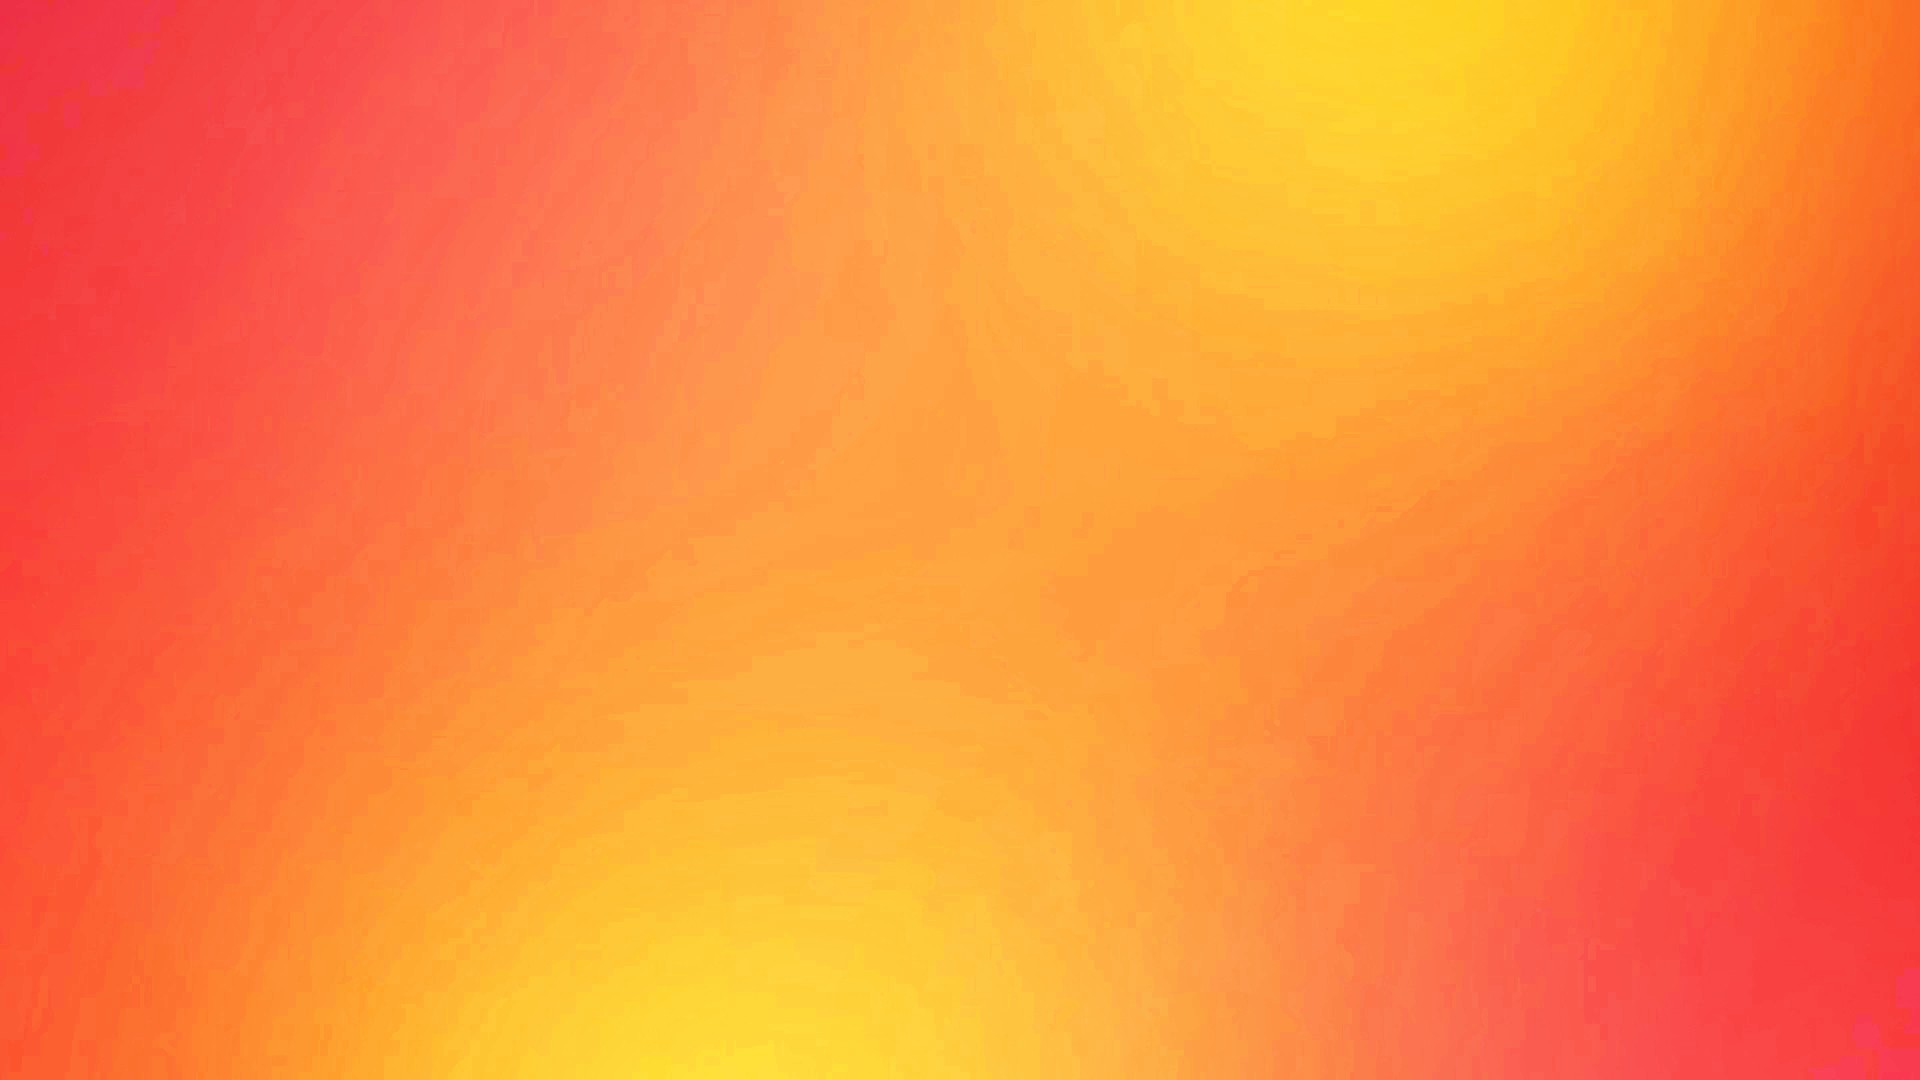 Orange And Yellow Gradient Background - 1920x1080 Wallpaper 